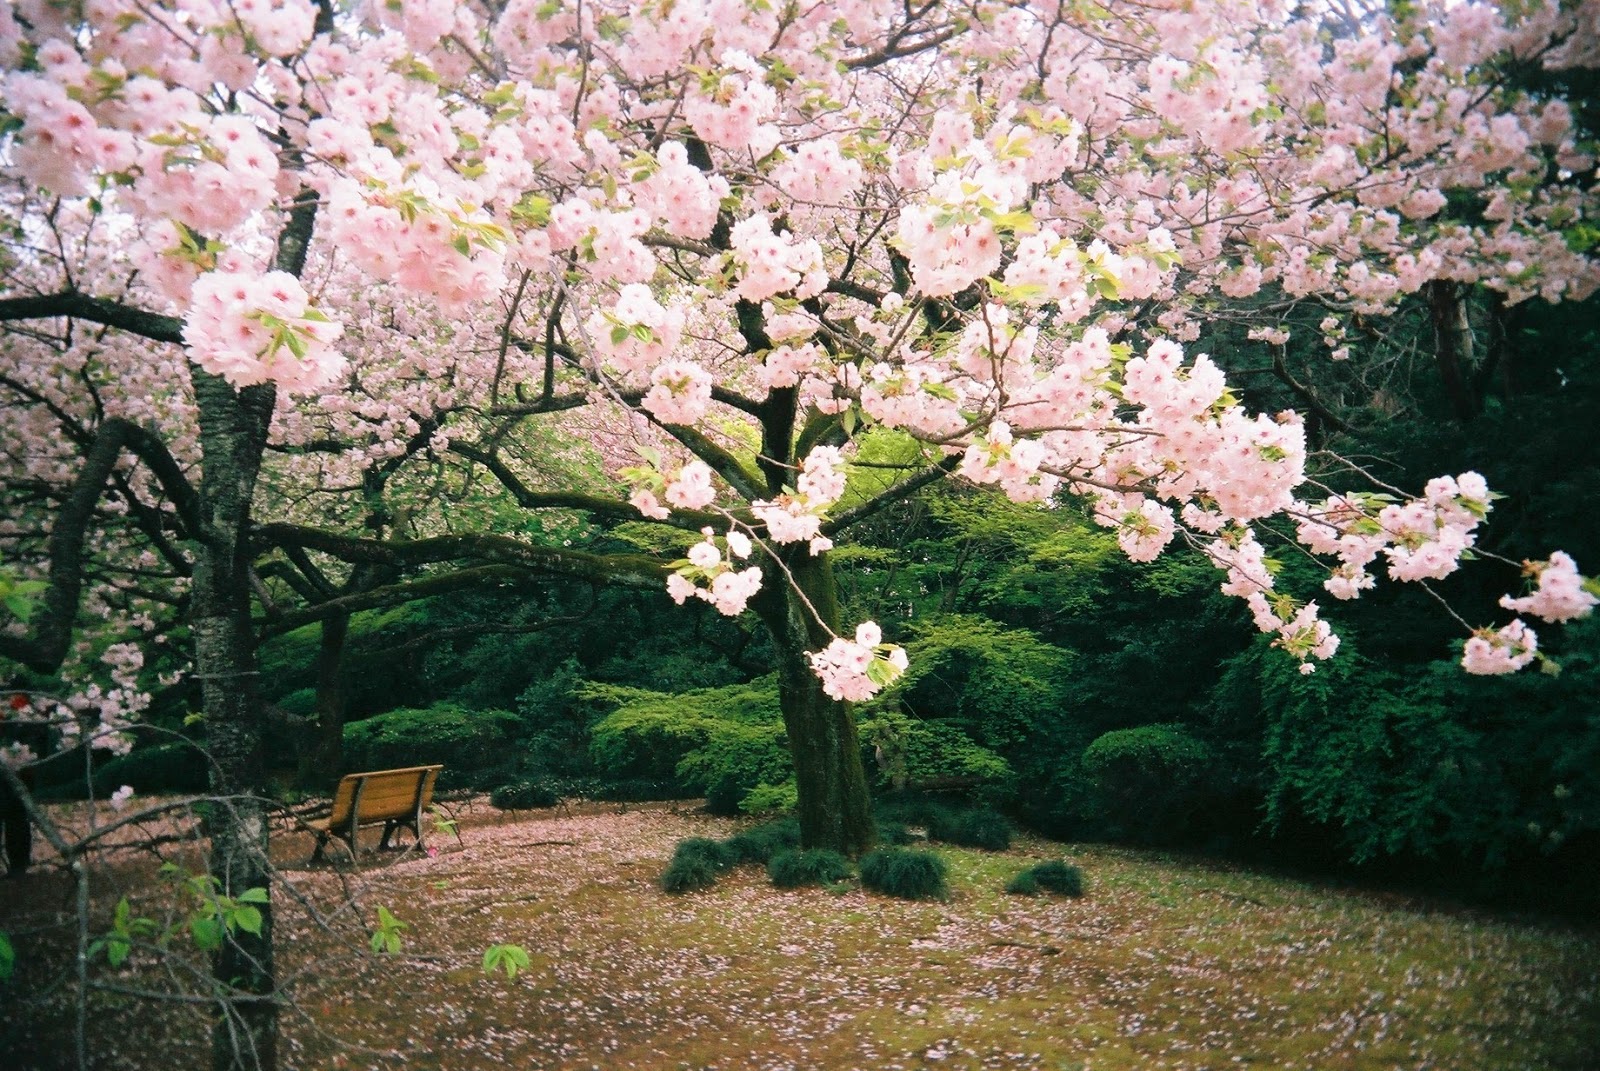  Gambar  Keindahan Bunga Sakura di Jepang  Taman taman indah 